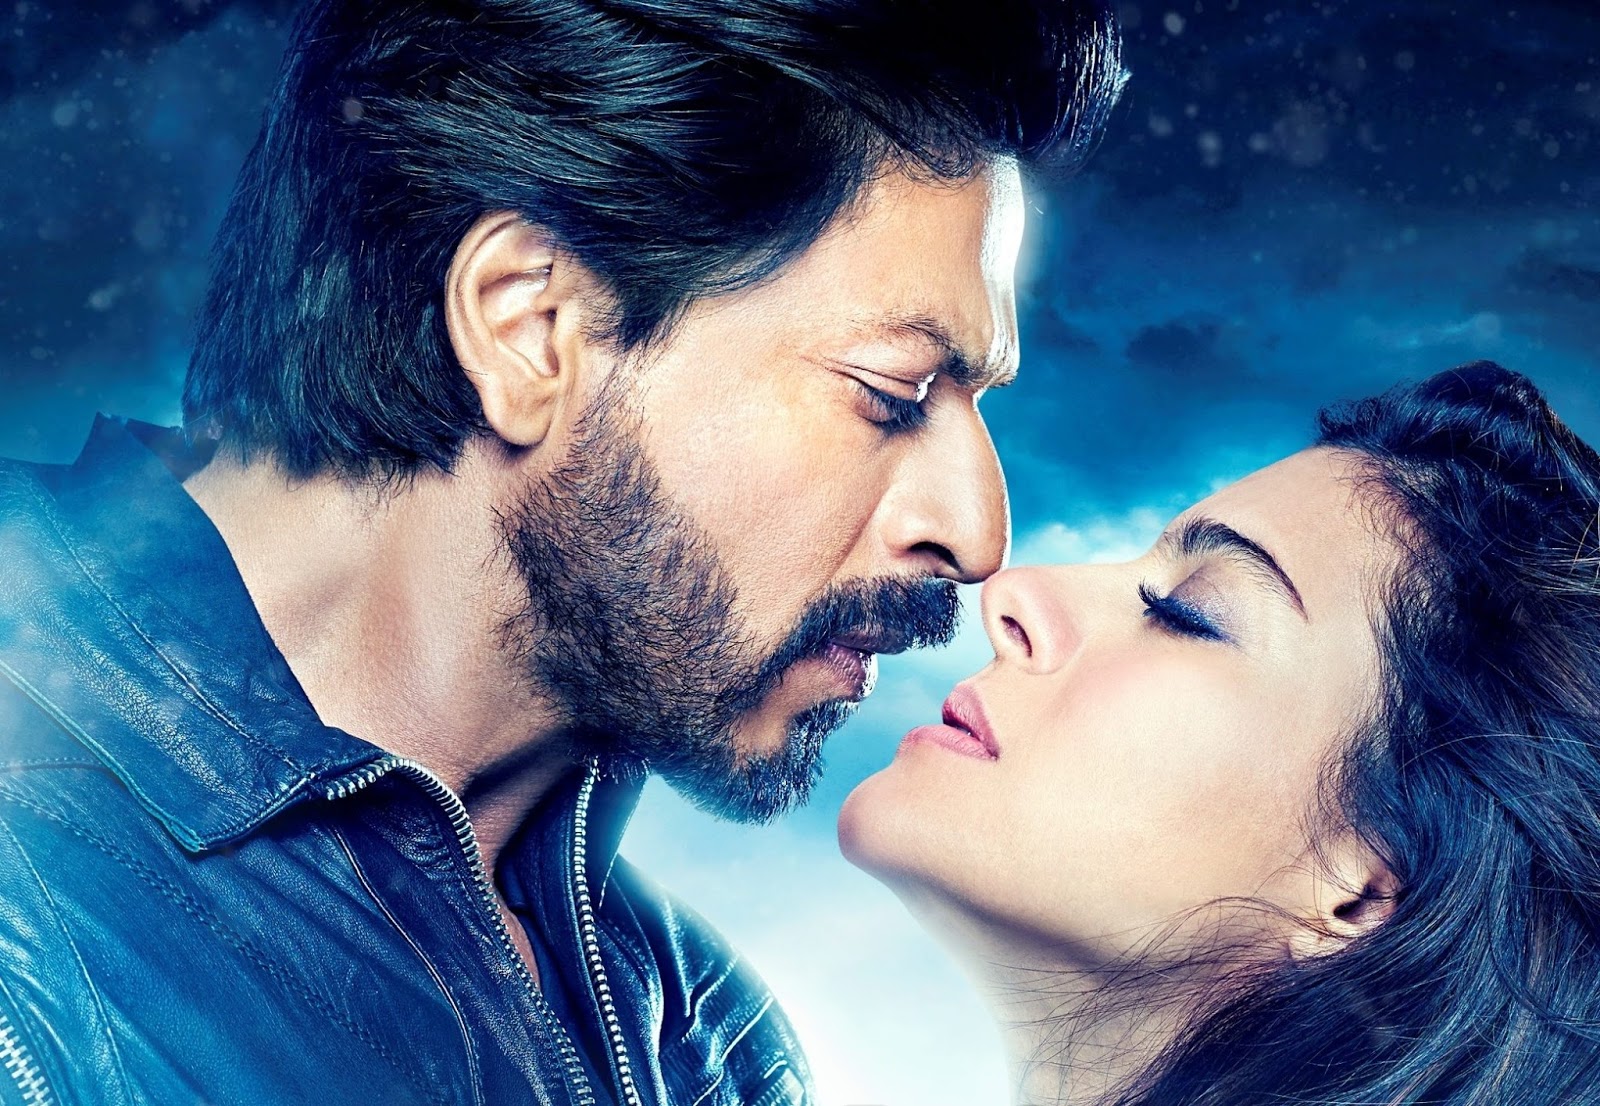 Shah Rukh Khan and Kajol To Star In a Film Soon? - Masala